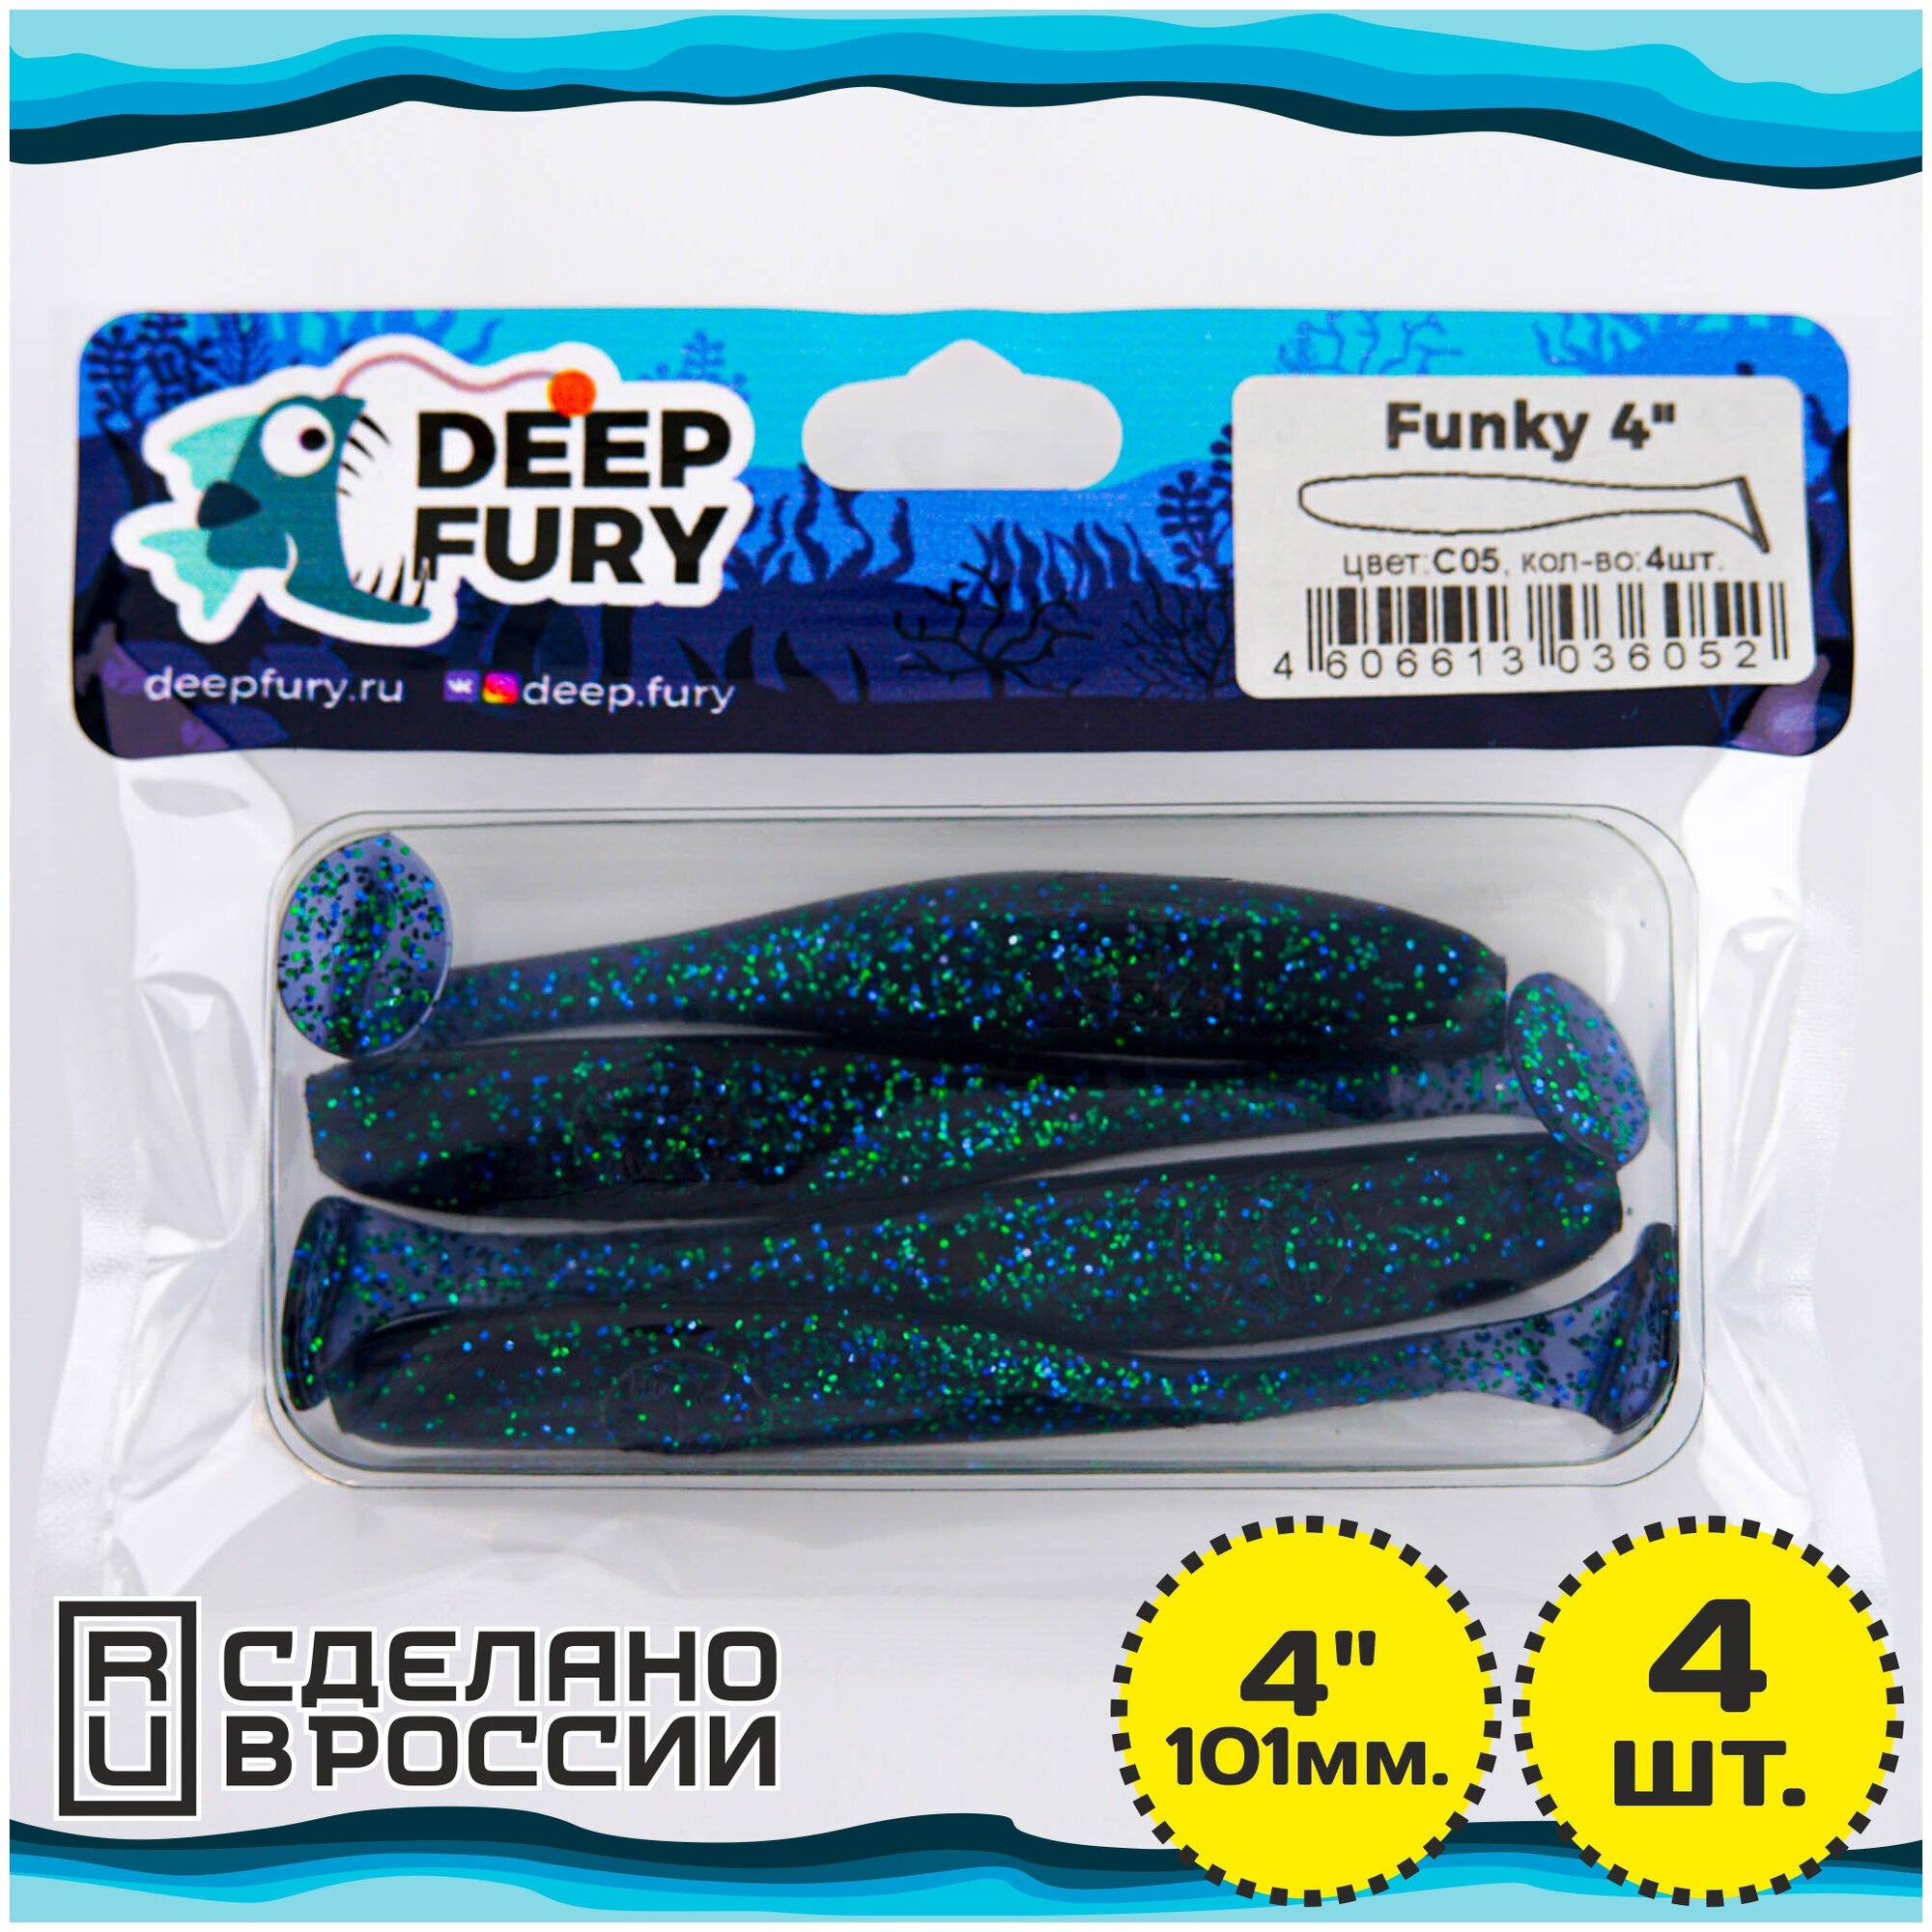   Deep Fury Funky 4" (101 .)  c05